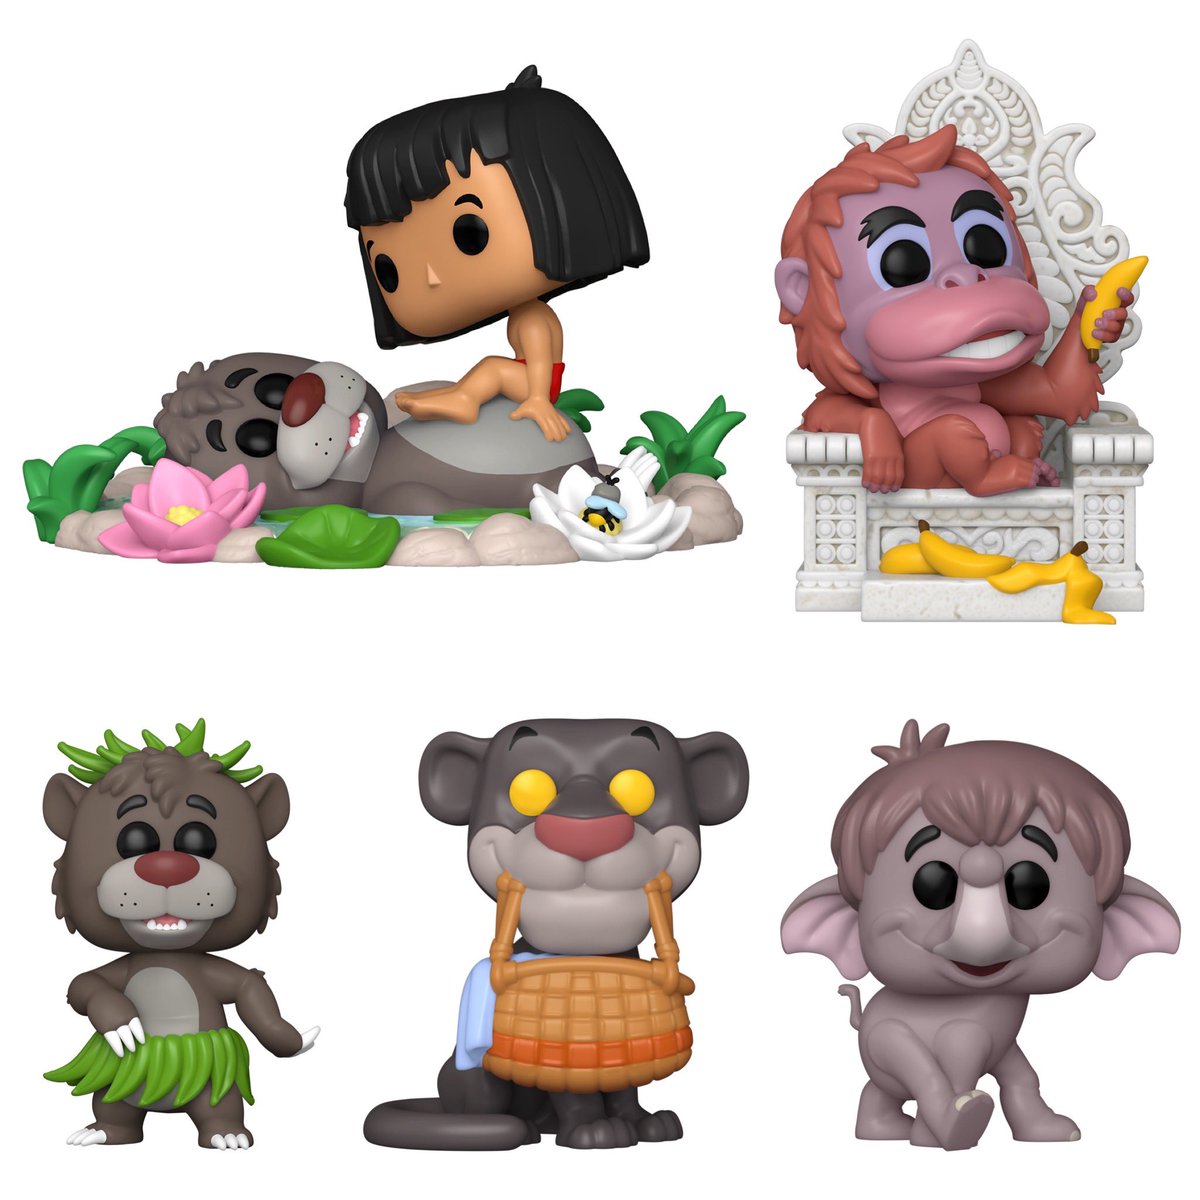 Preorder Now: Jungle Book Pops at Amazon!
#Ad #Disney #JungleBook
.
amzn.to/3wz8FD0
.
In order: Baloo, Hathi Jr., Baloo & Mowgli, Bagheera, & King Louie.
#Funko #FunkoPop #FunkoPopVinyl #Pop #PopVinyl #Collectibles #Collectible #FunkoCollector #FunkoPops #Collector #Toy…